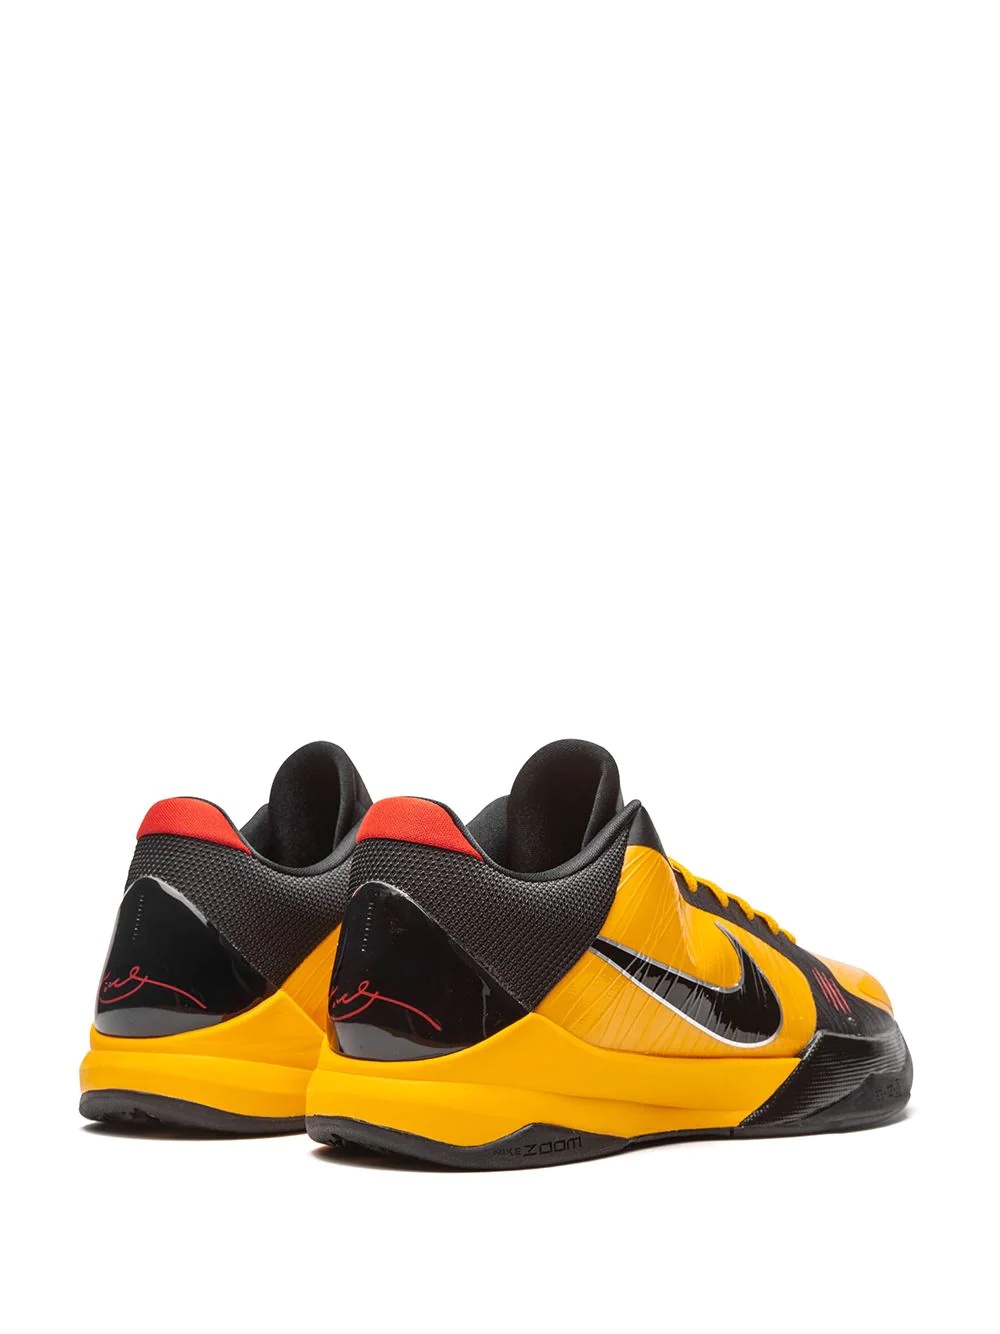 Kobe 5 Protro "Bruce Lee" sneakers - 3